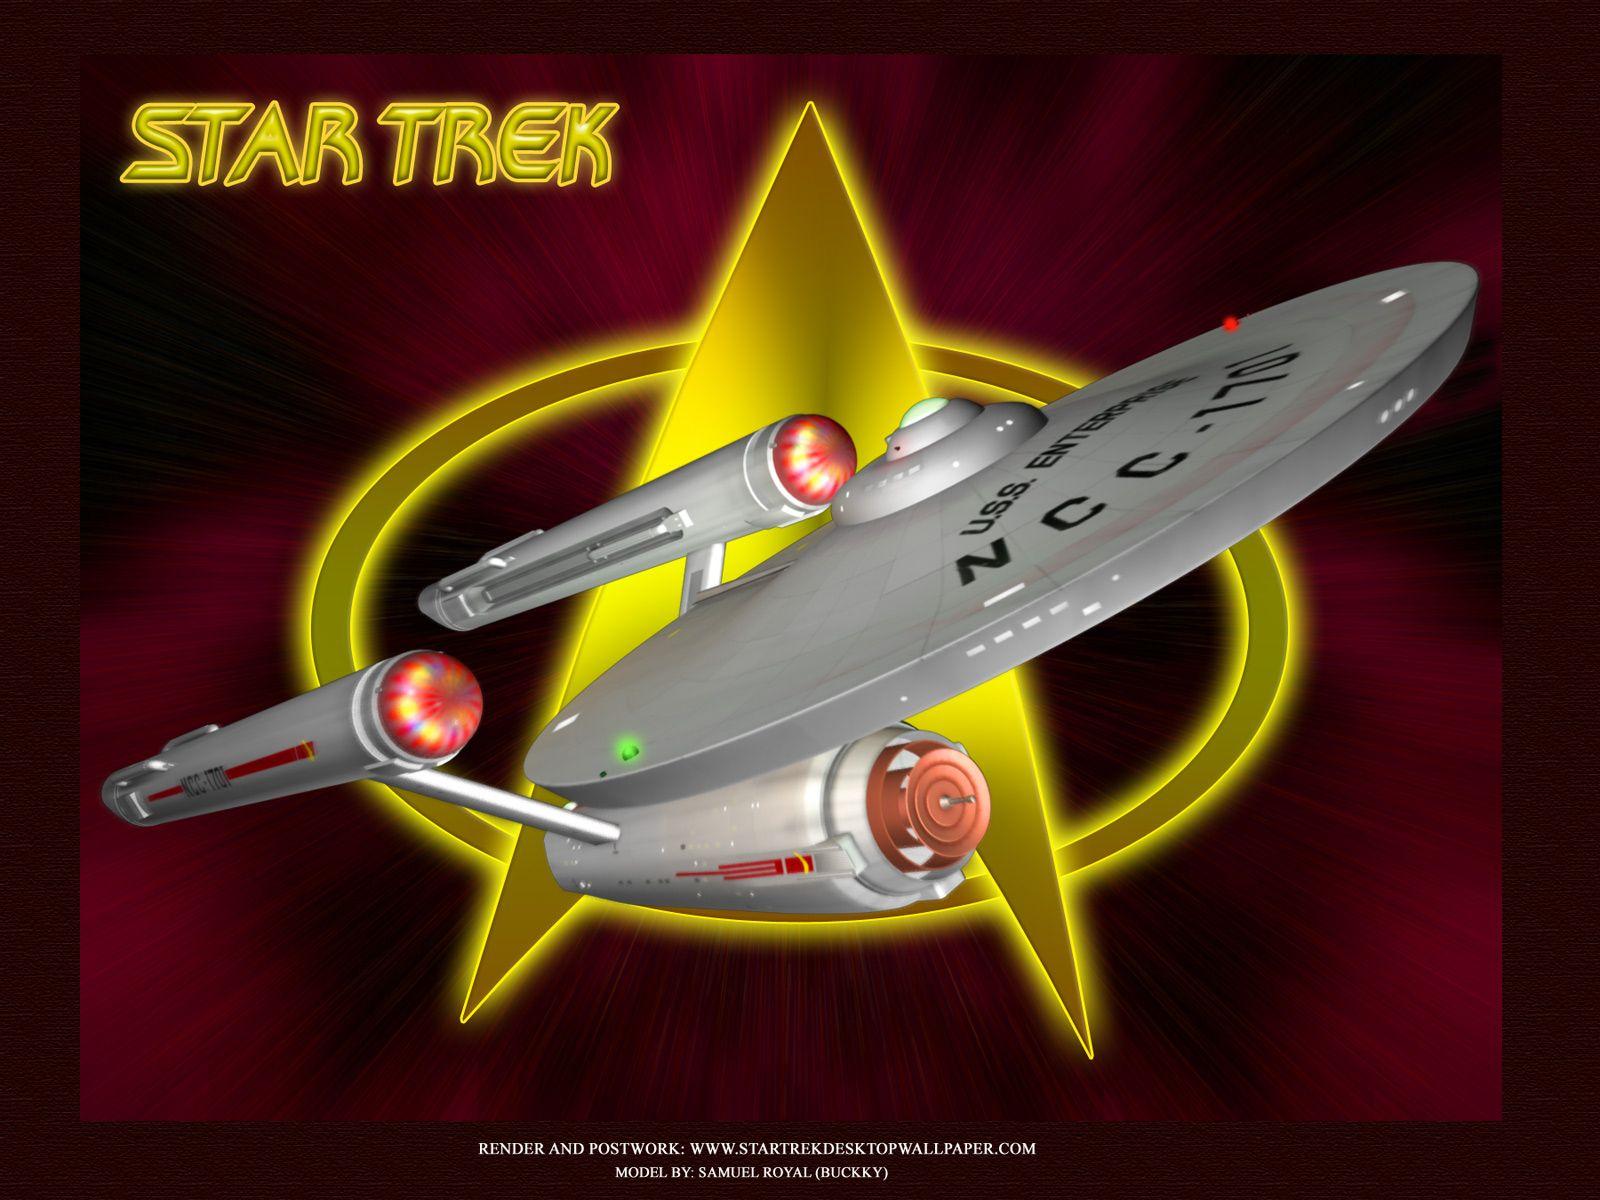 Star Trek: The Original Series Wallpaper 19 X 1200